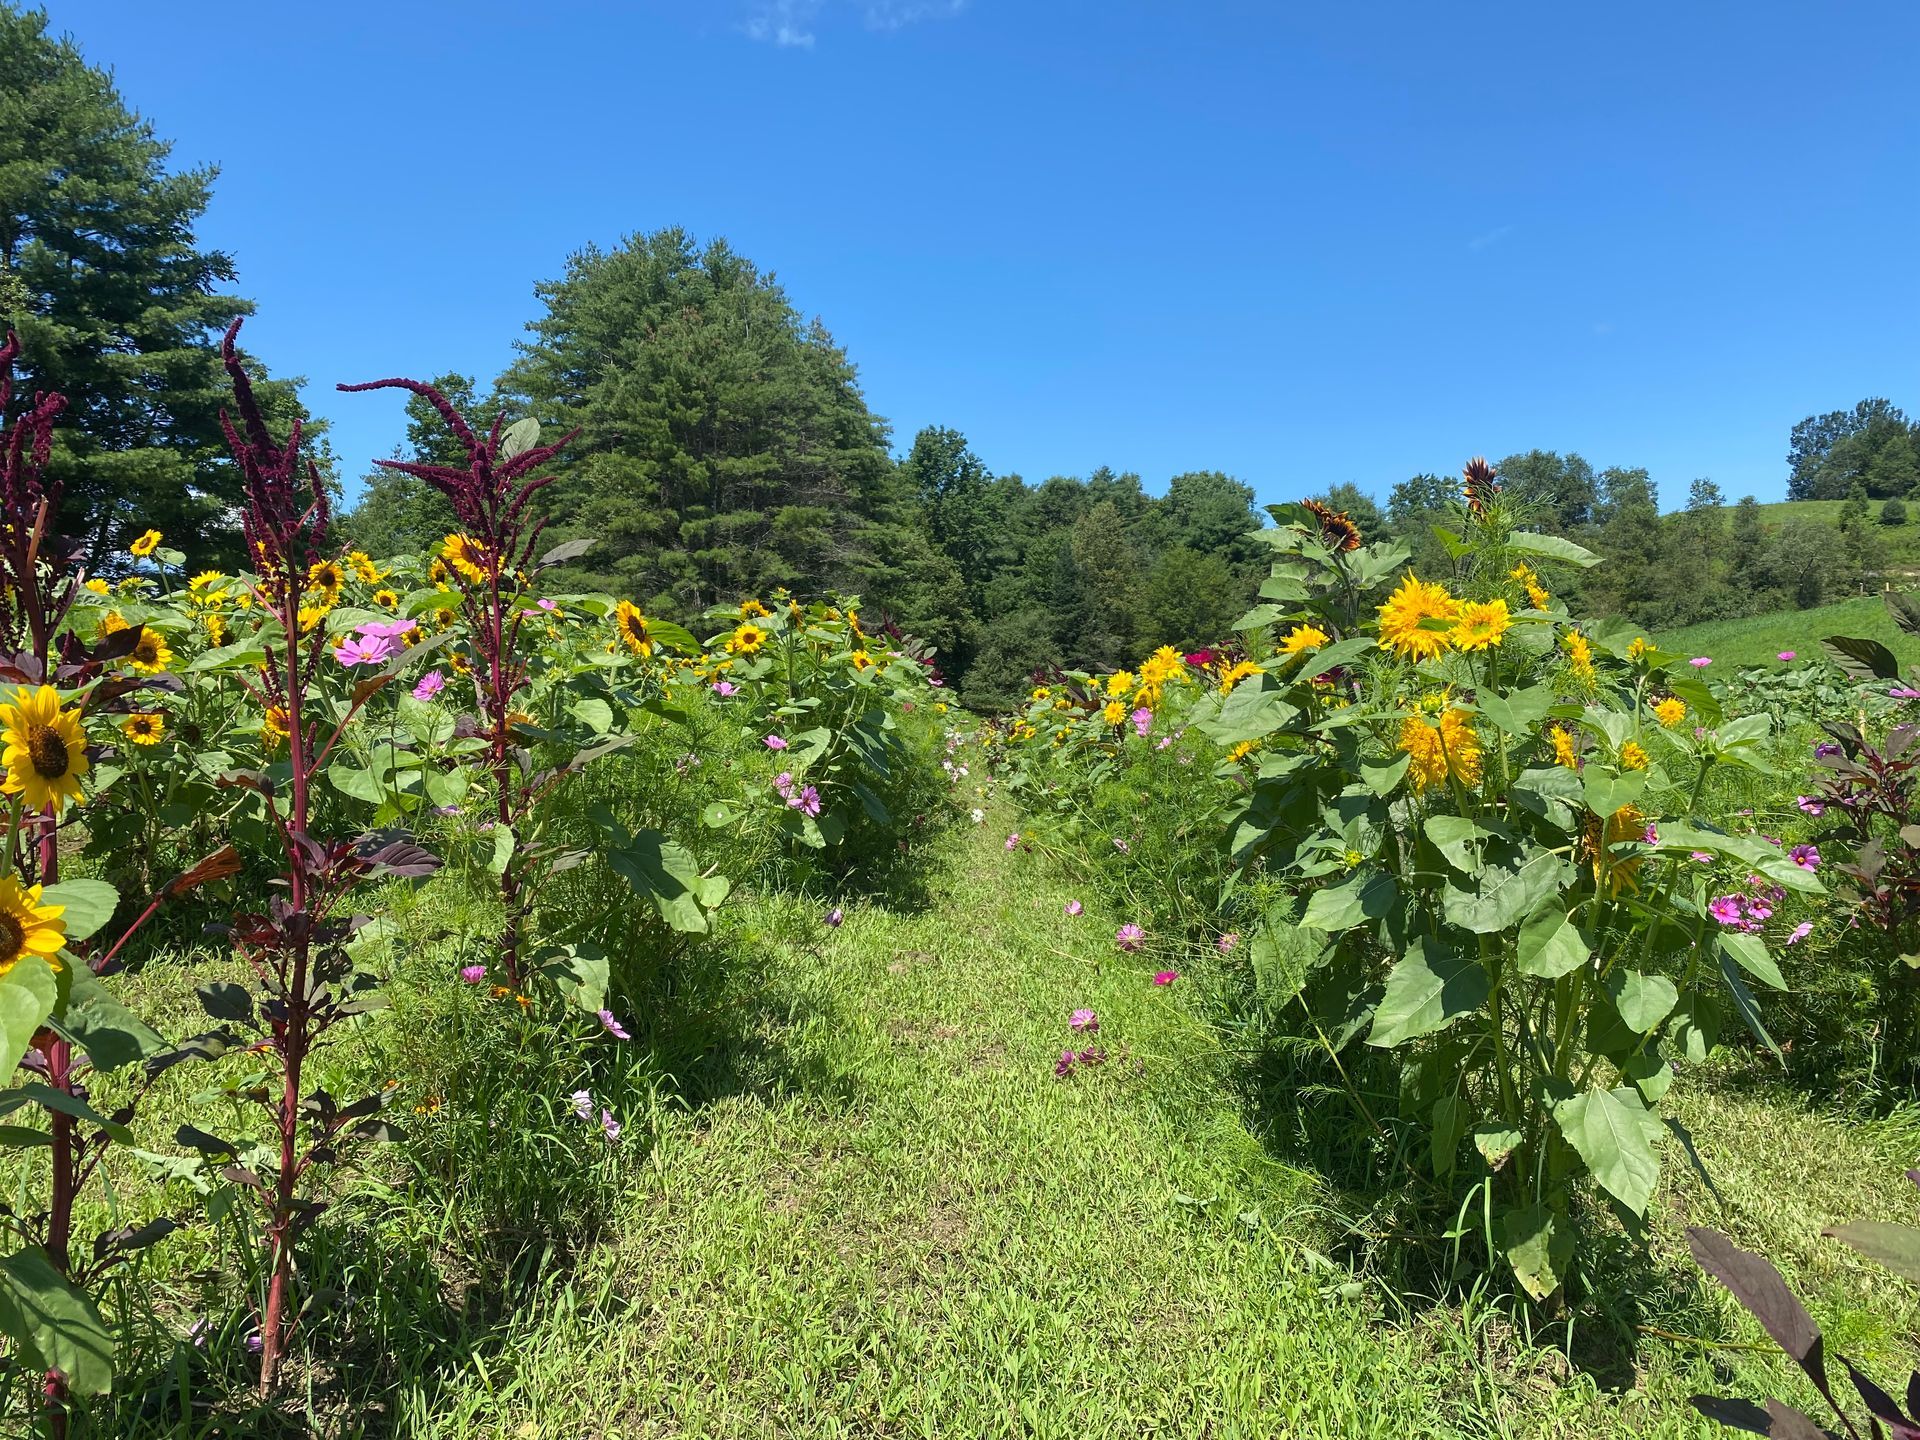 The Hoolie Flats Farm Flower Maze in East Calais, Vermont during Summer